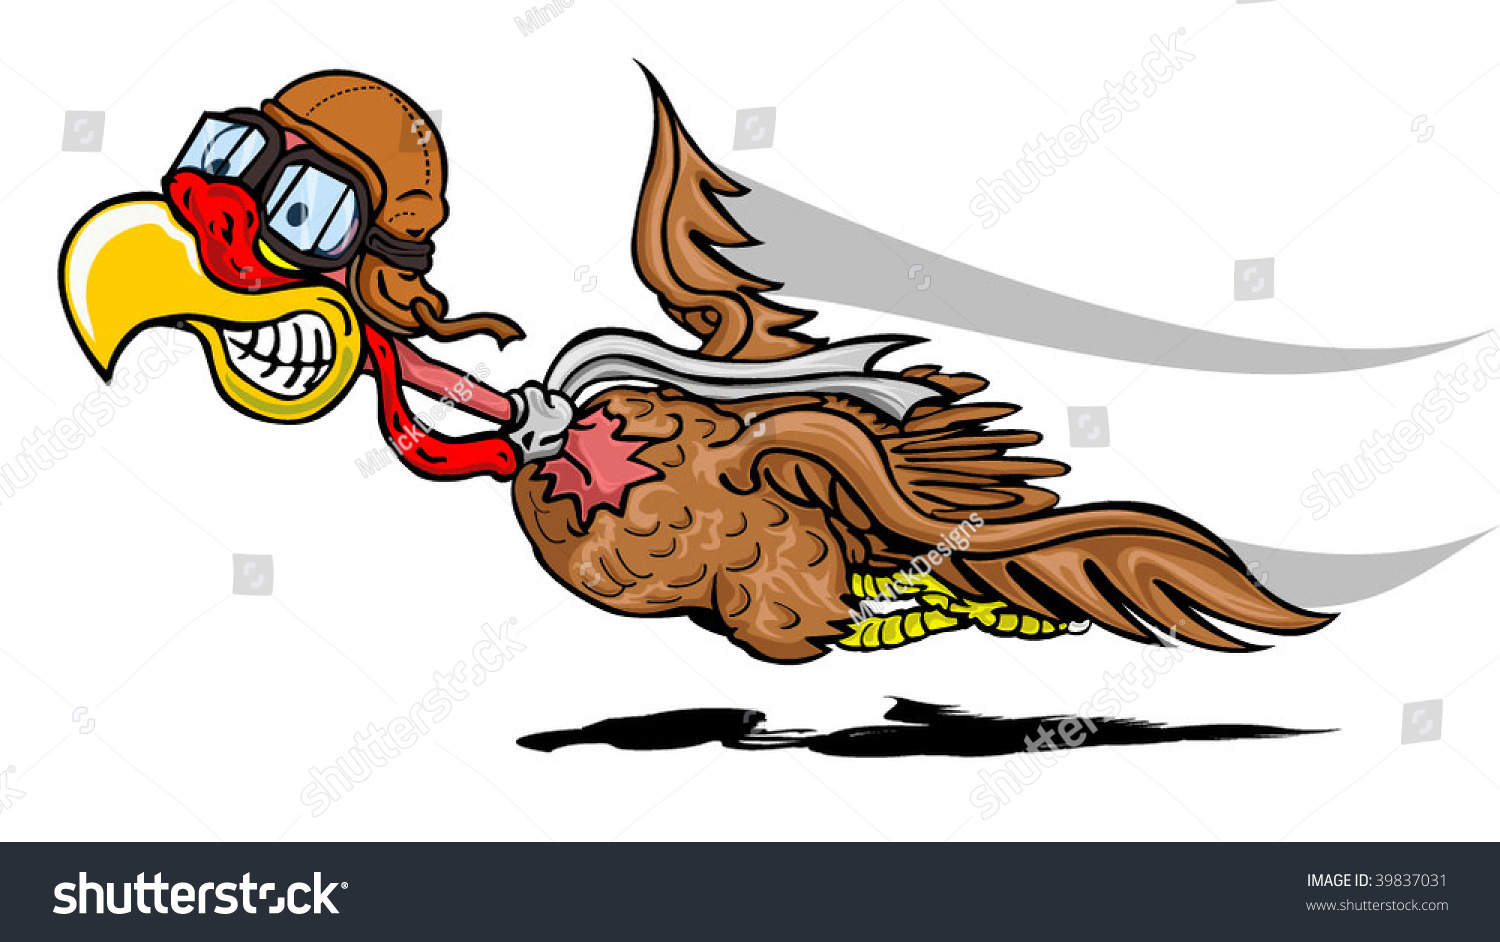 Image result for flying turkey